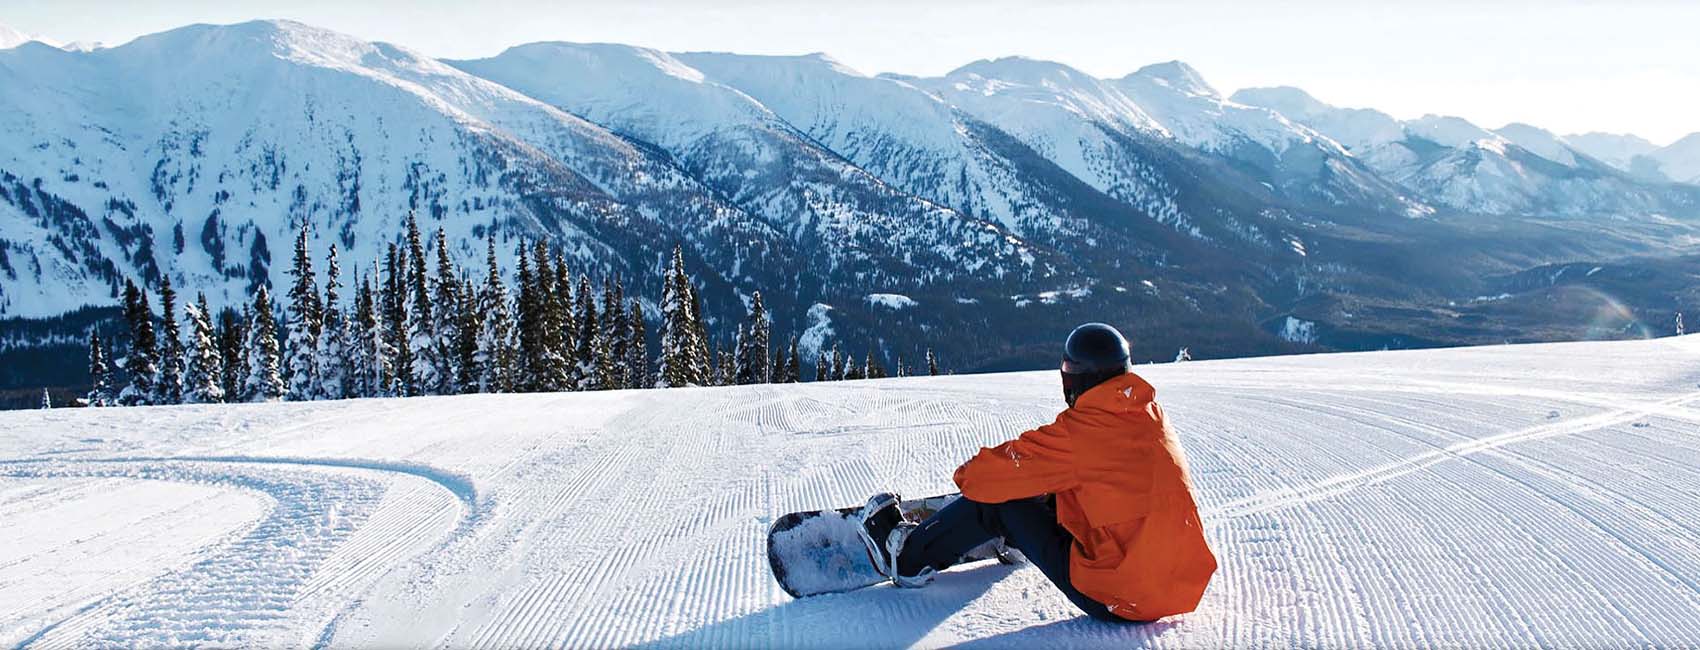 Snowboarding man sitting on sunny ski hill